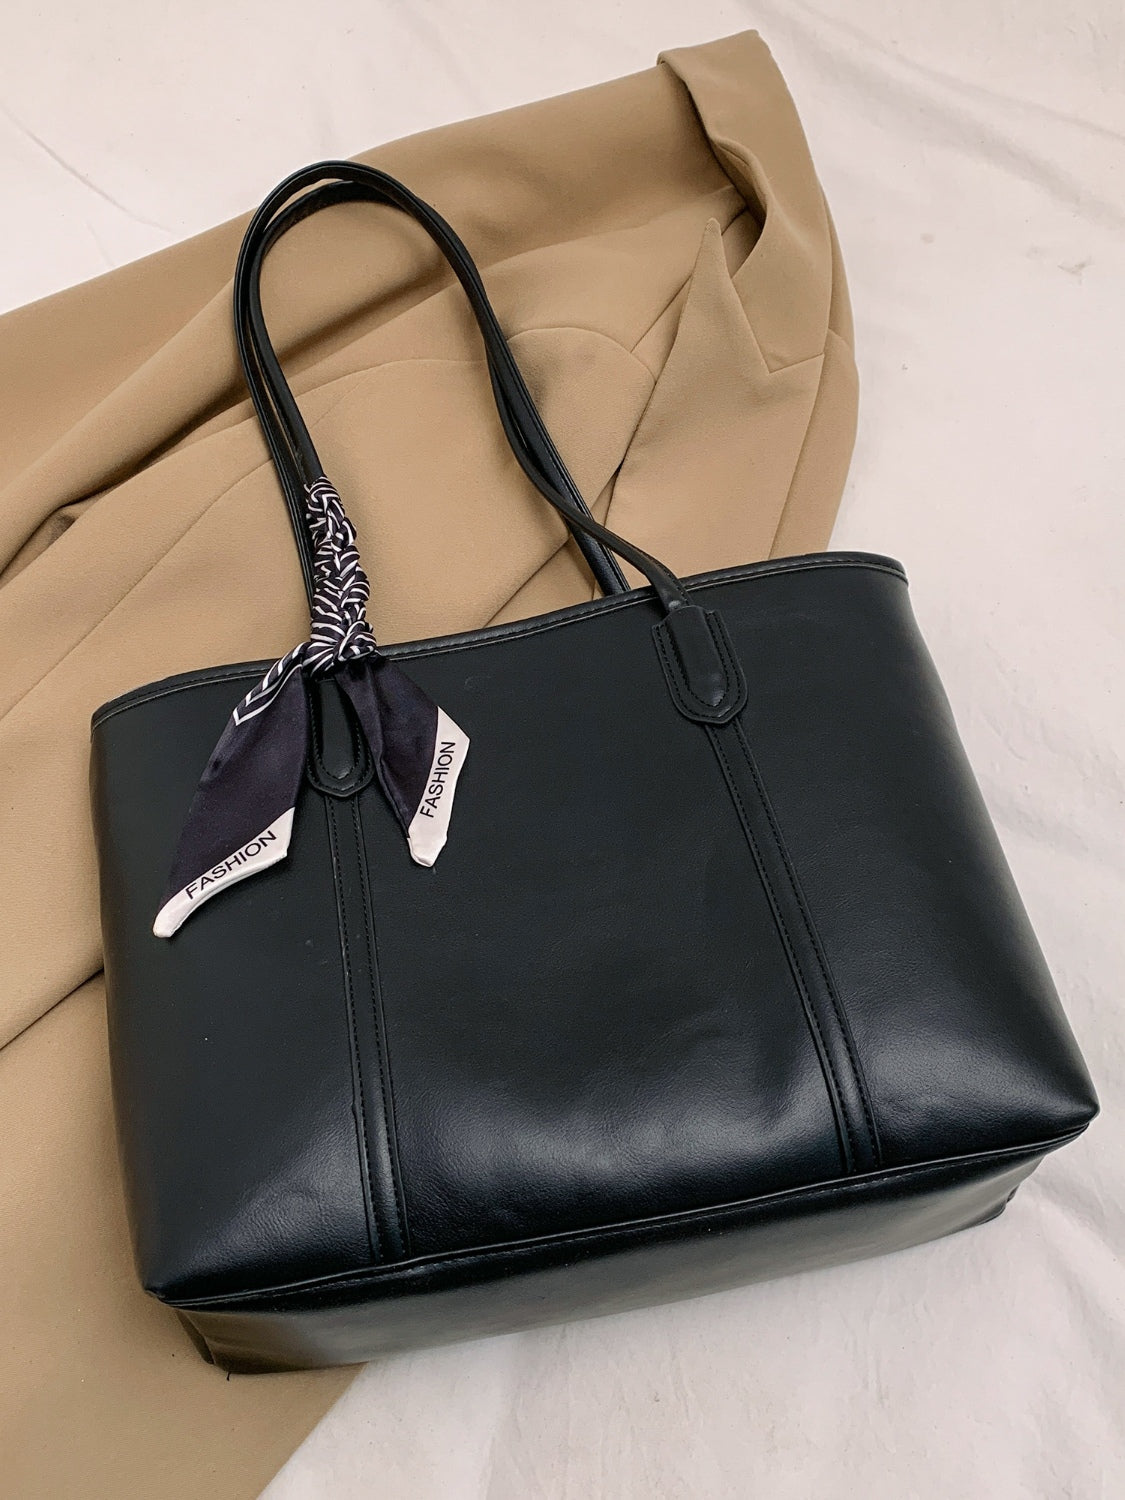 PU Leather Tote Bag